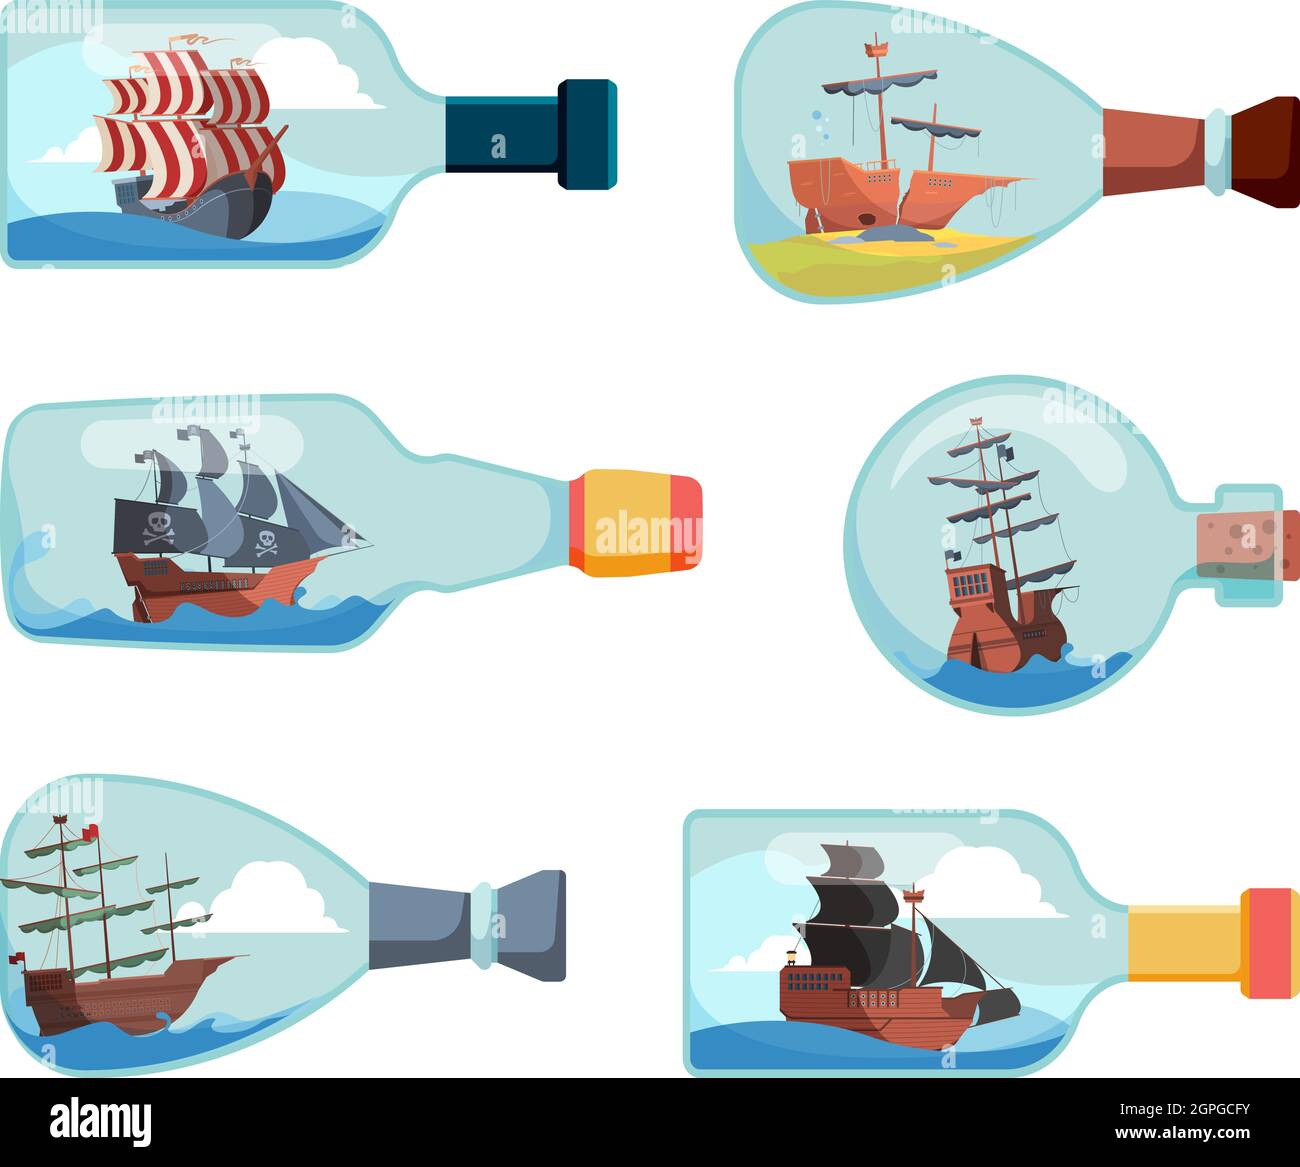 Ship in bottles. Decorative marine souvenir bottles boat vector illustrations Stock Vector